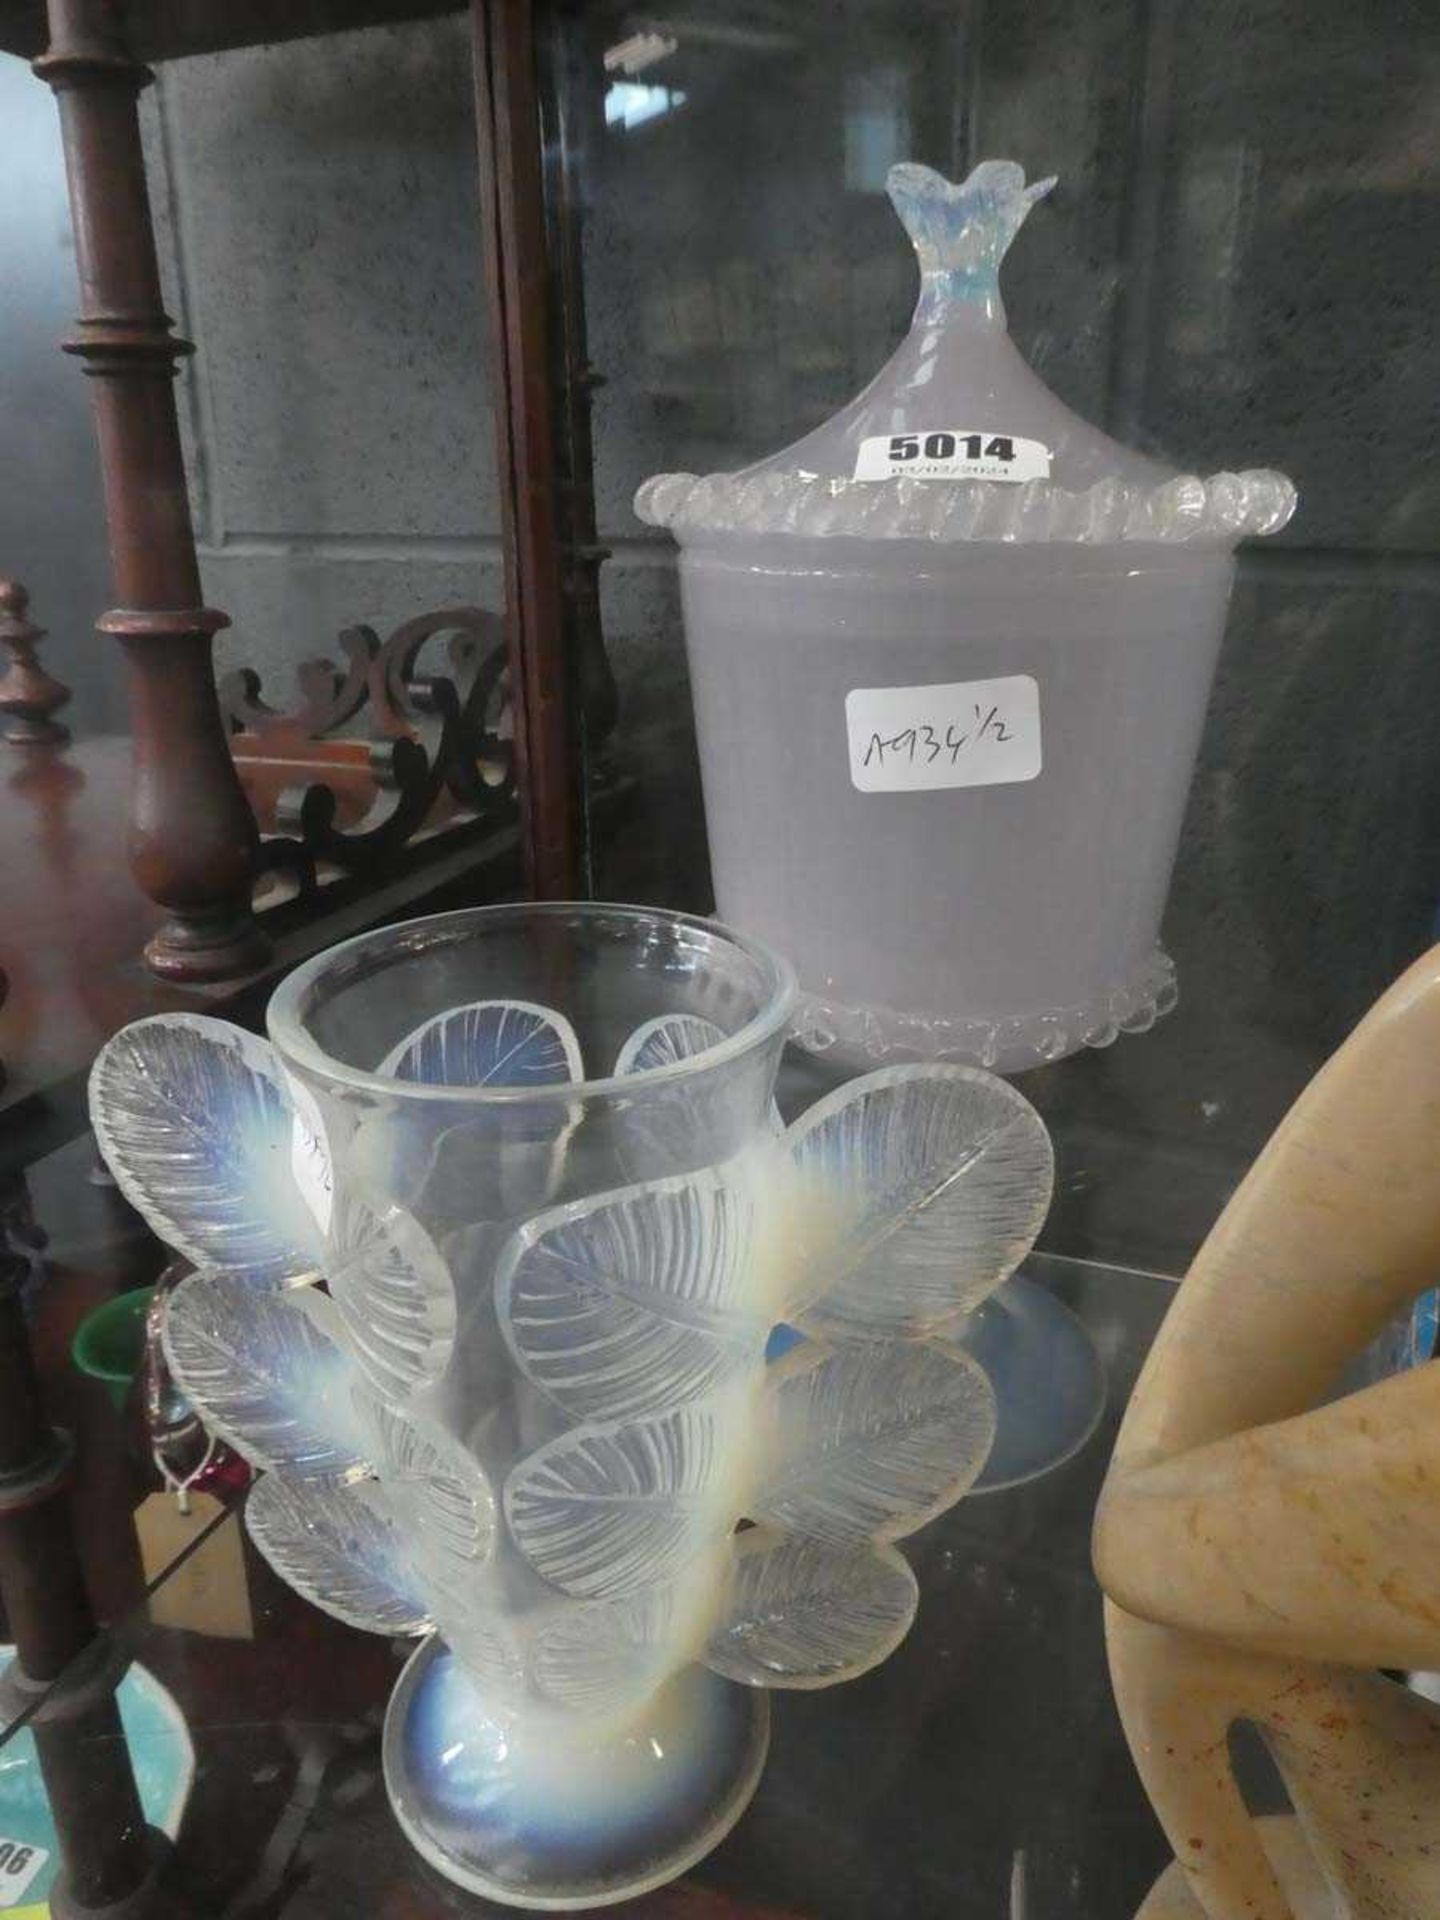 2 vaseline glass vessels